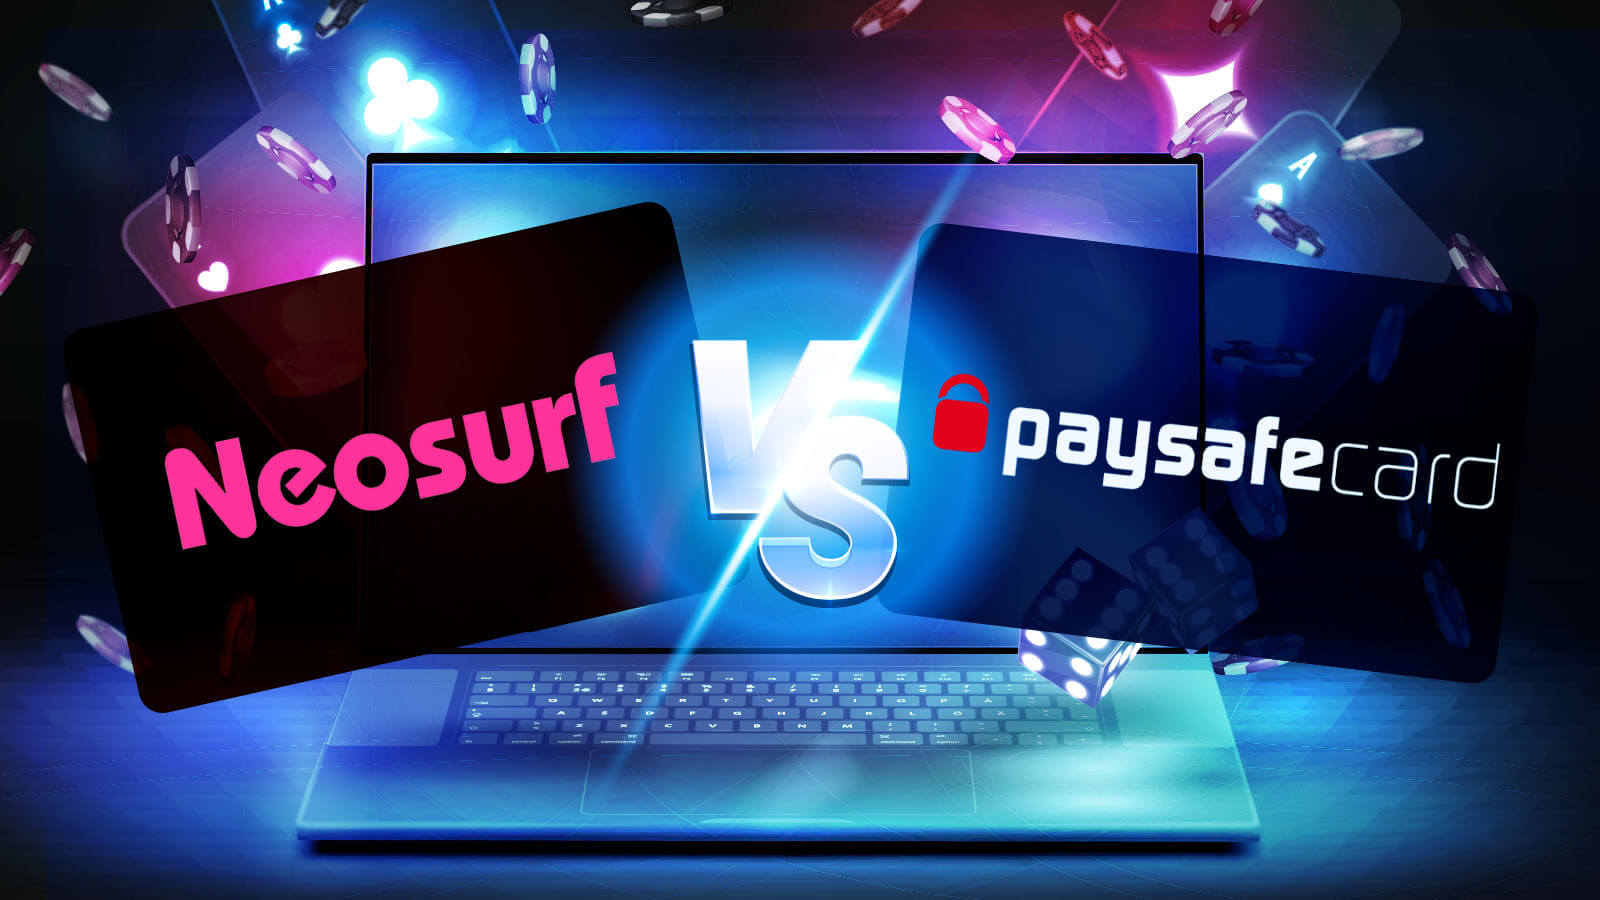 paysafe-vs-neosurf-in-online-casinos